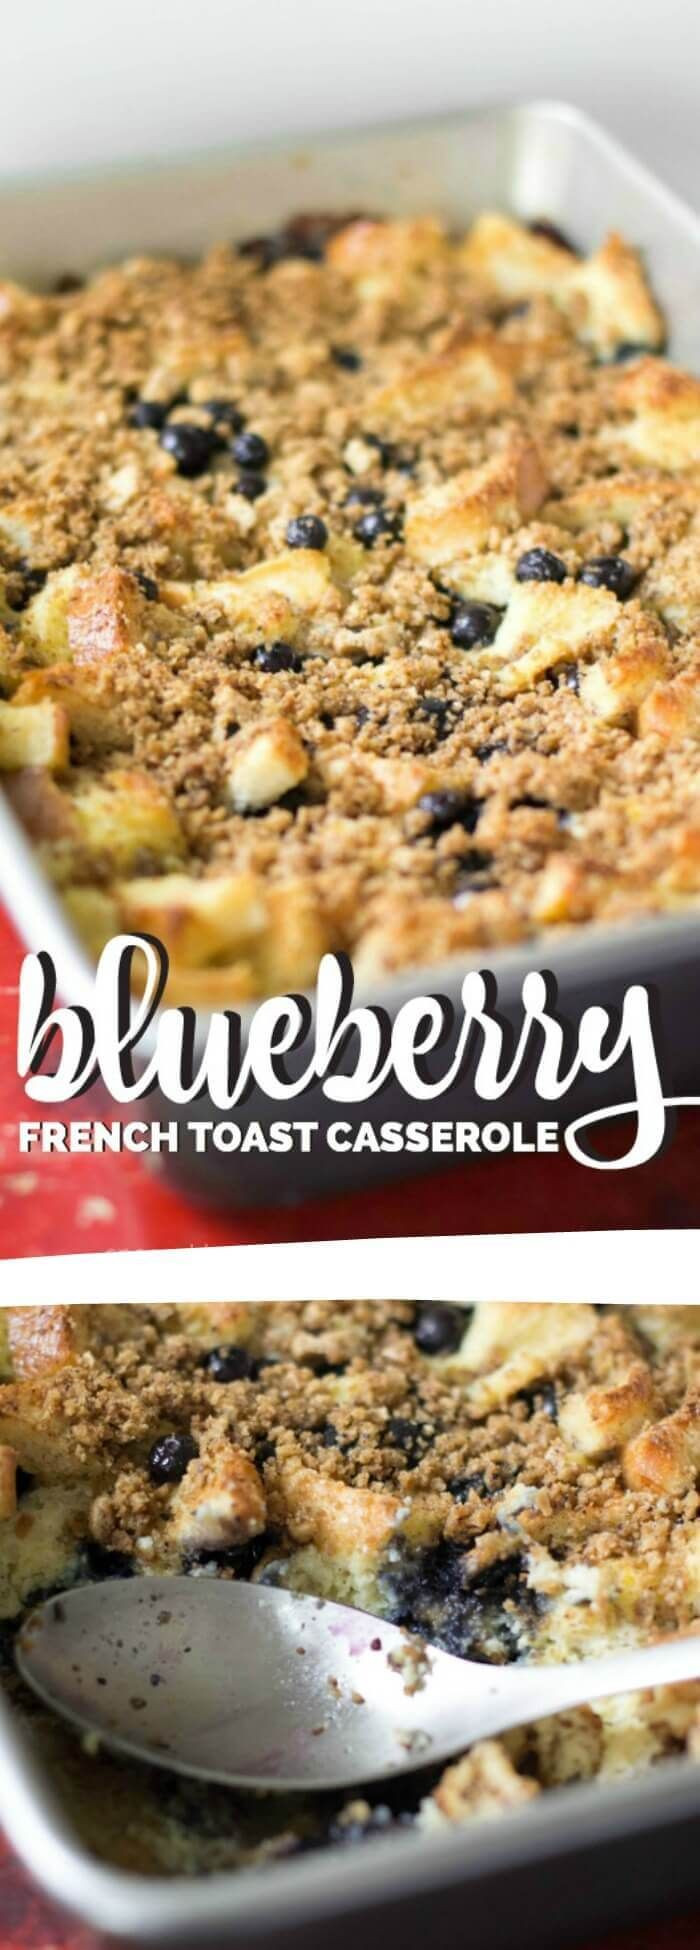 French Toast Casserole Tasty
 Blueberry French Toast Casserole